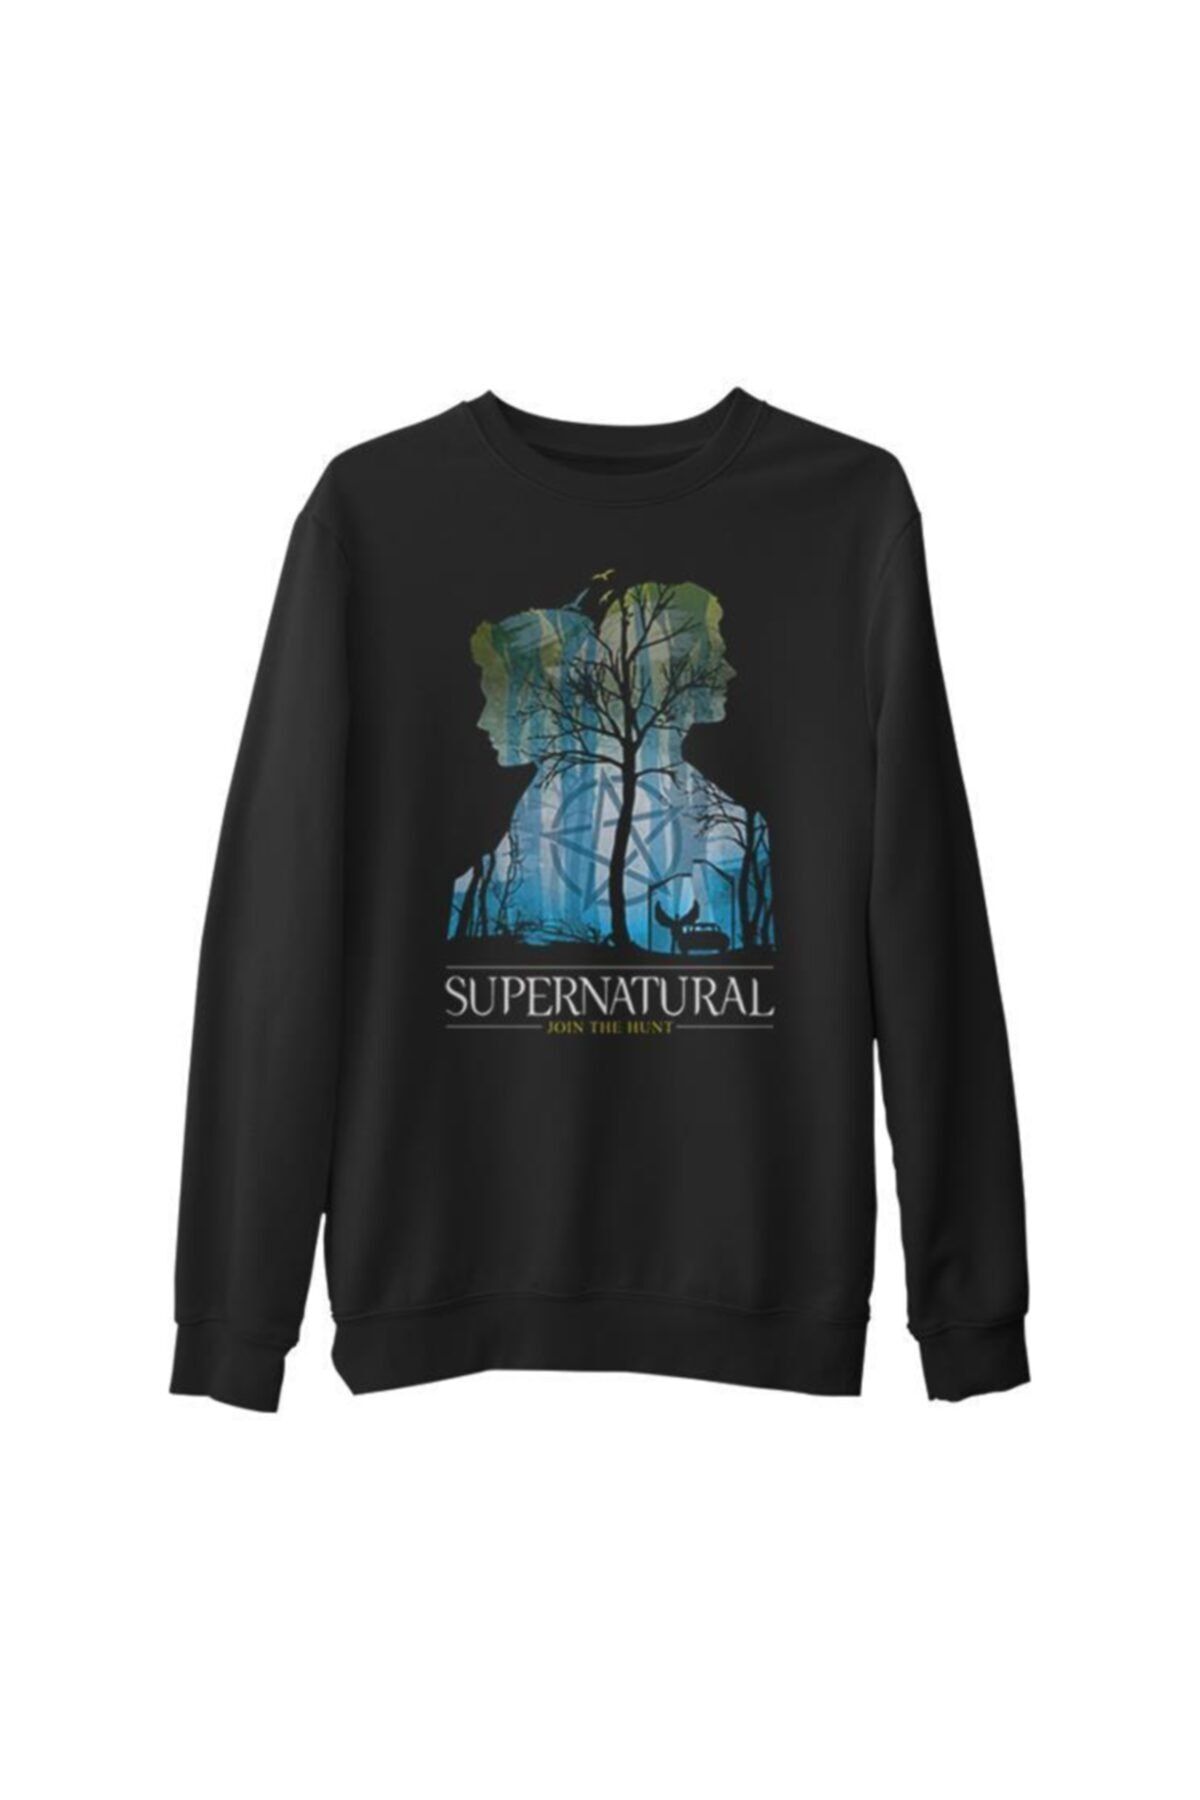 Lord T-Shirt Supernatural - Impala Siyah Erkek Kalın Sweatshirt